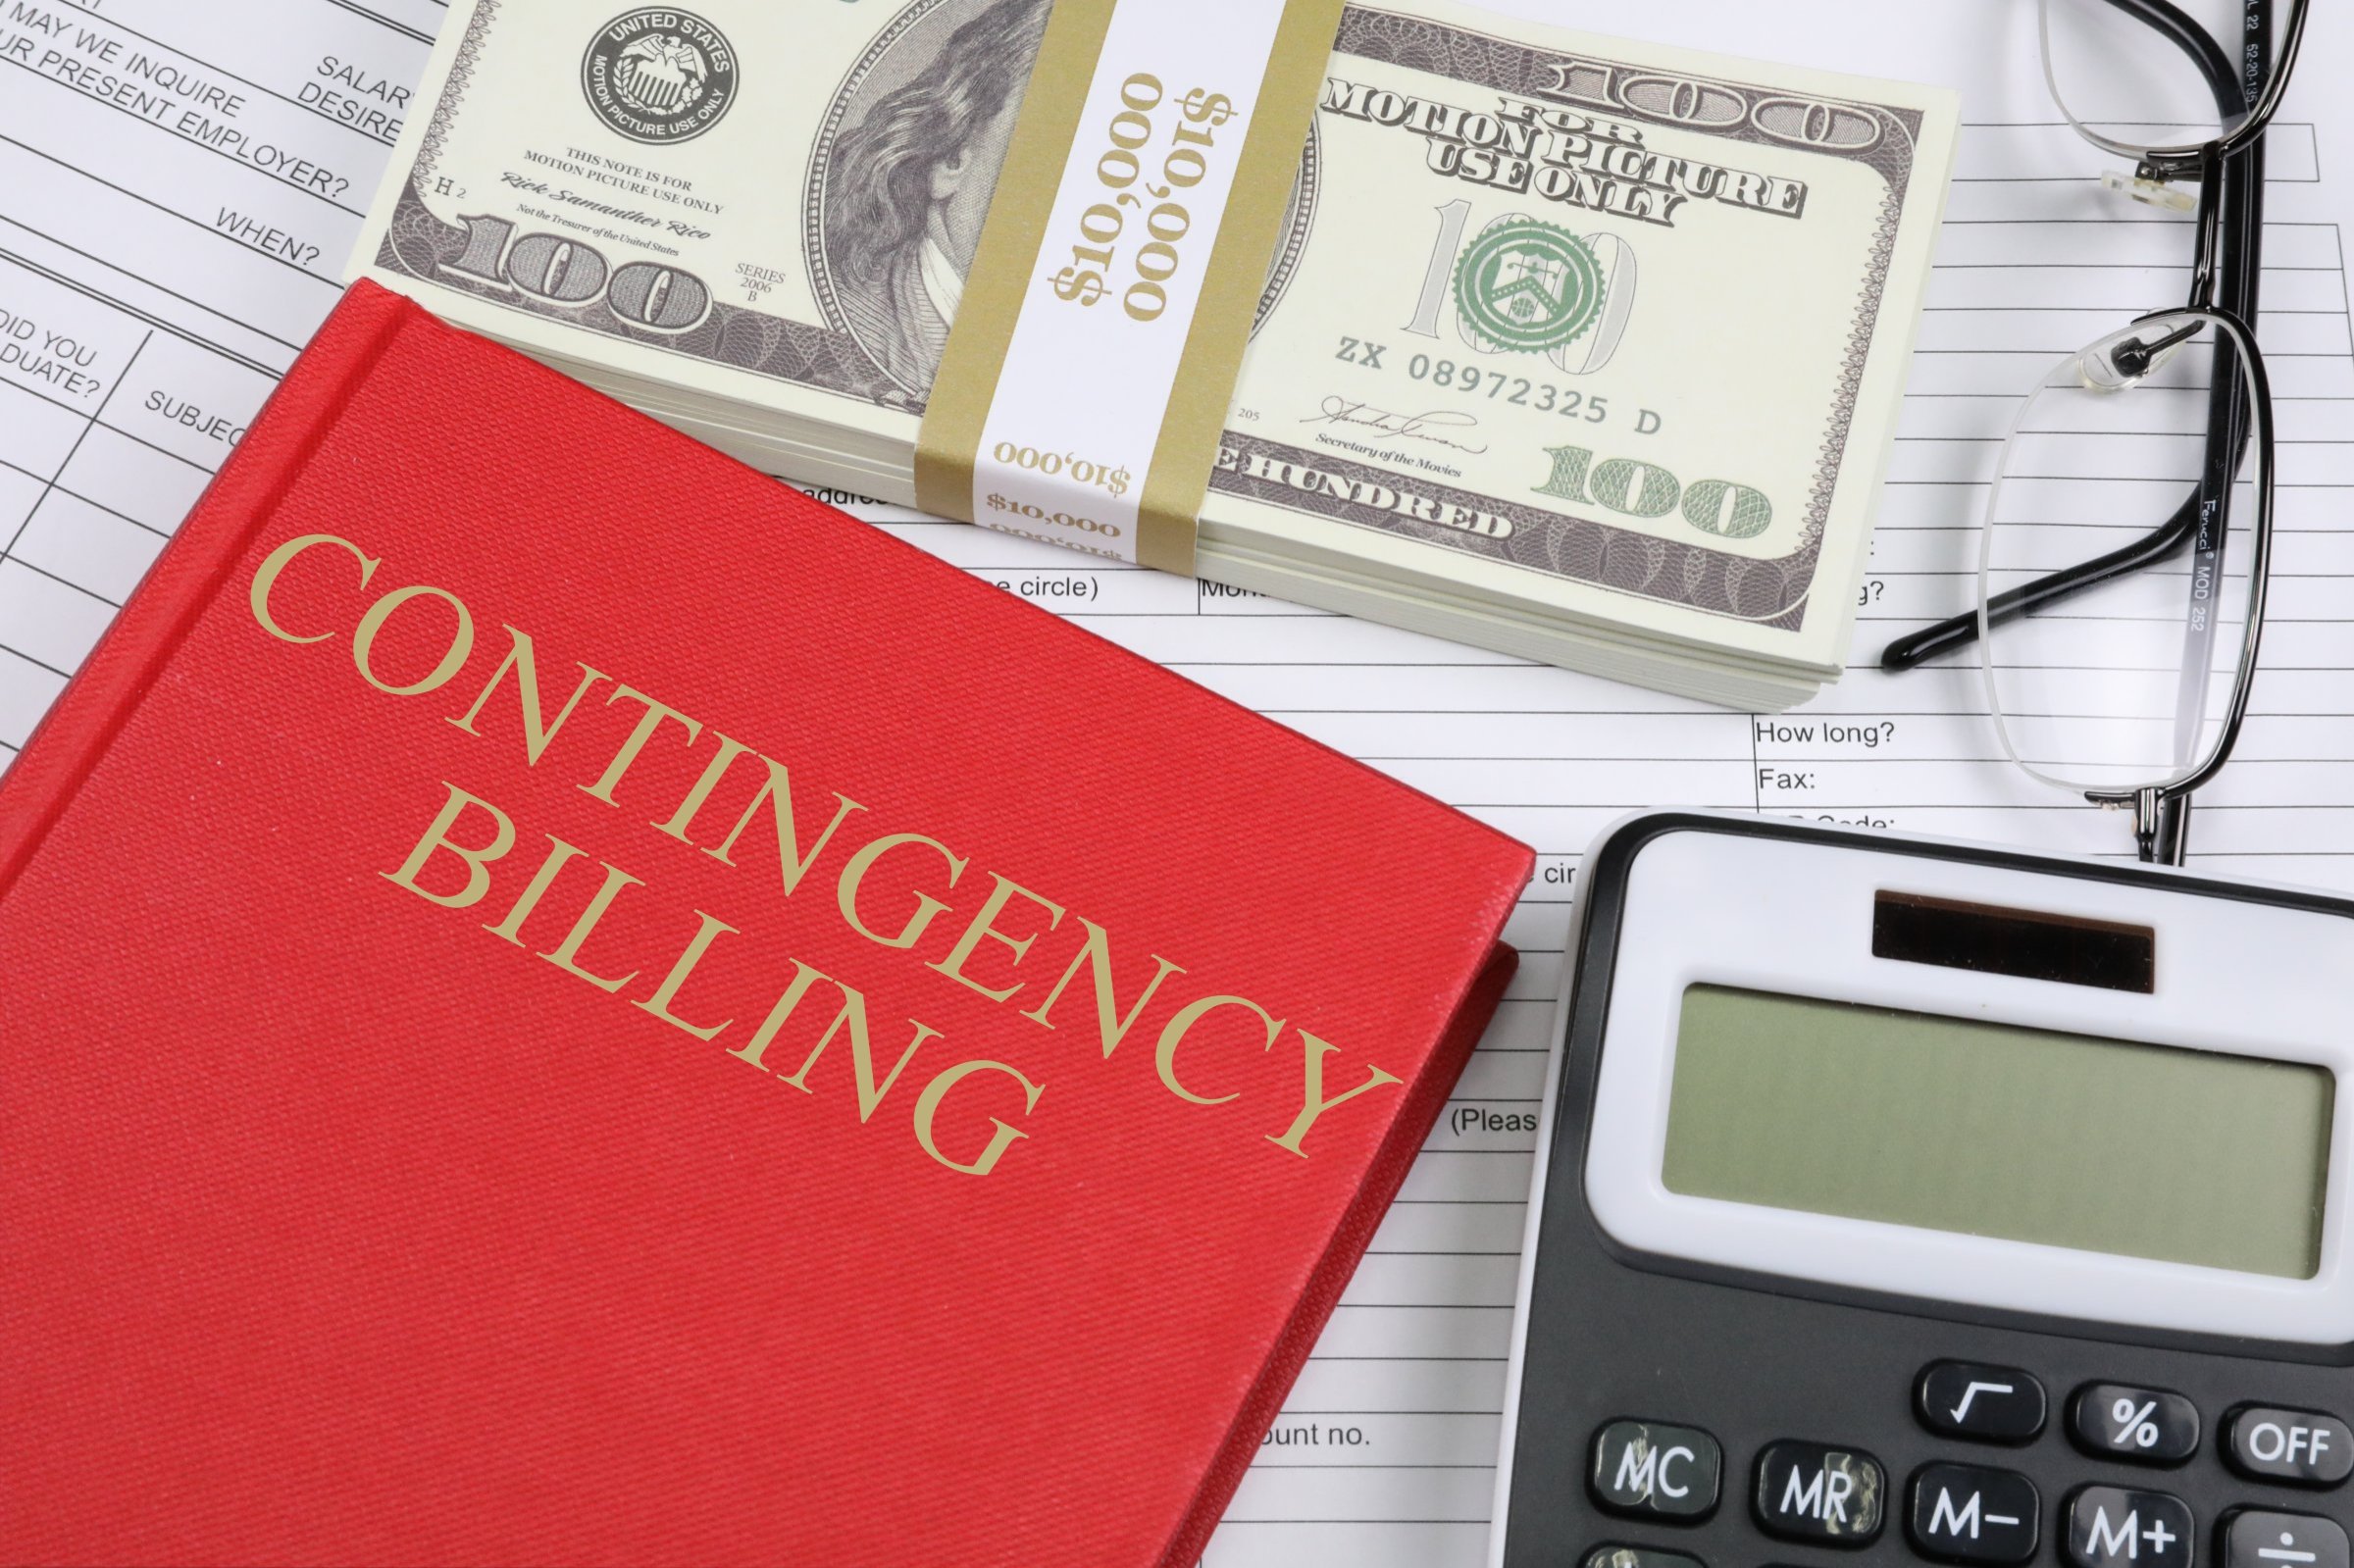 contingency billing